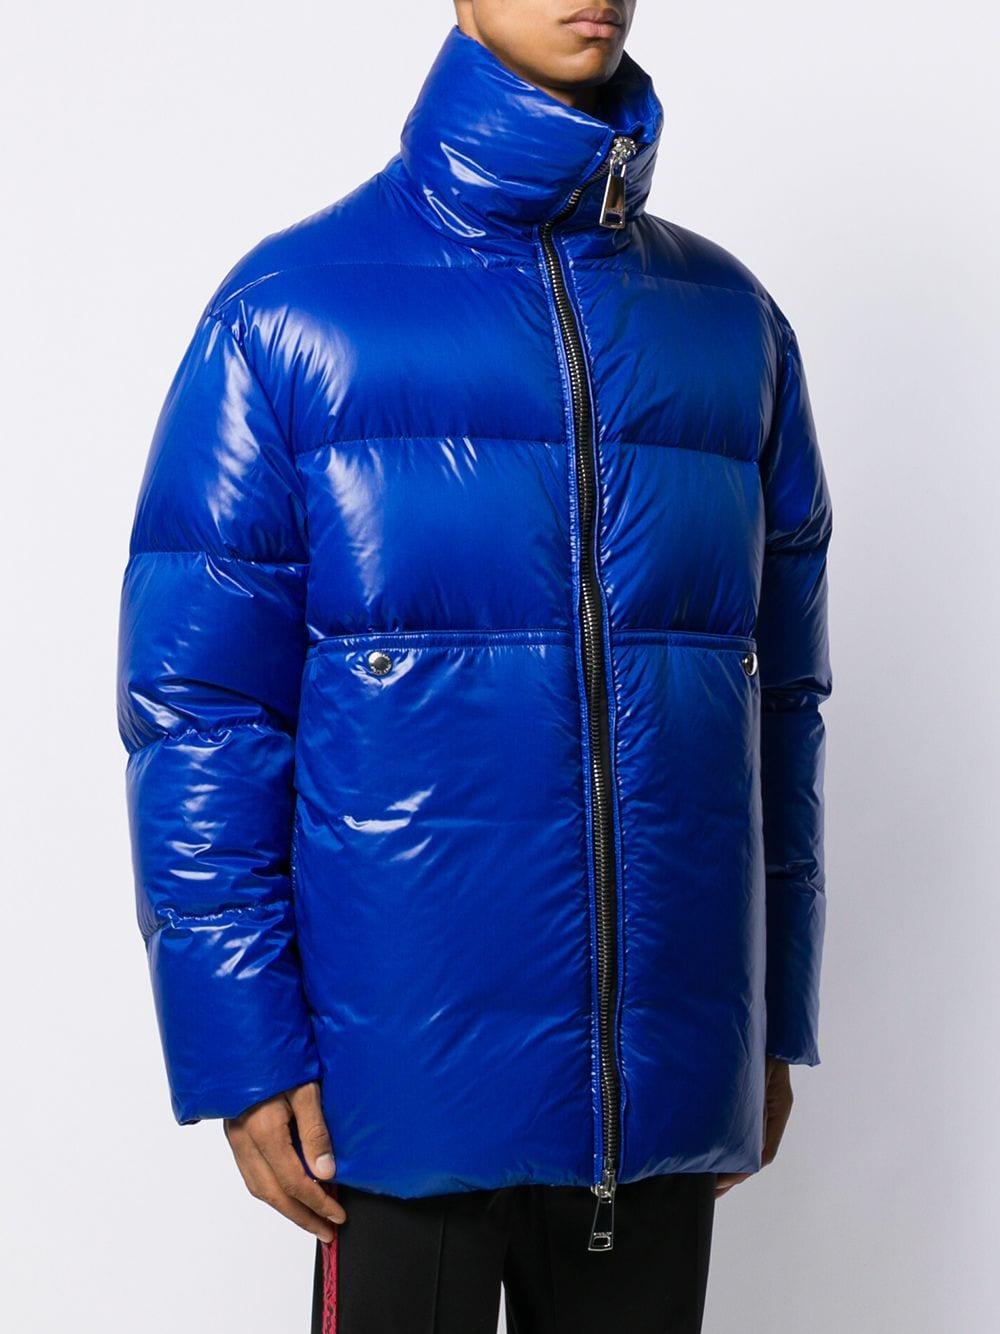 Khrisjoy Fitted Puffer Jacket in Blue for Men - Lyst